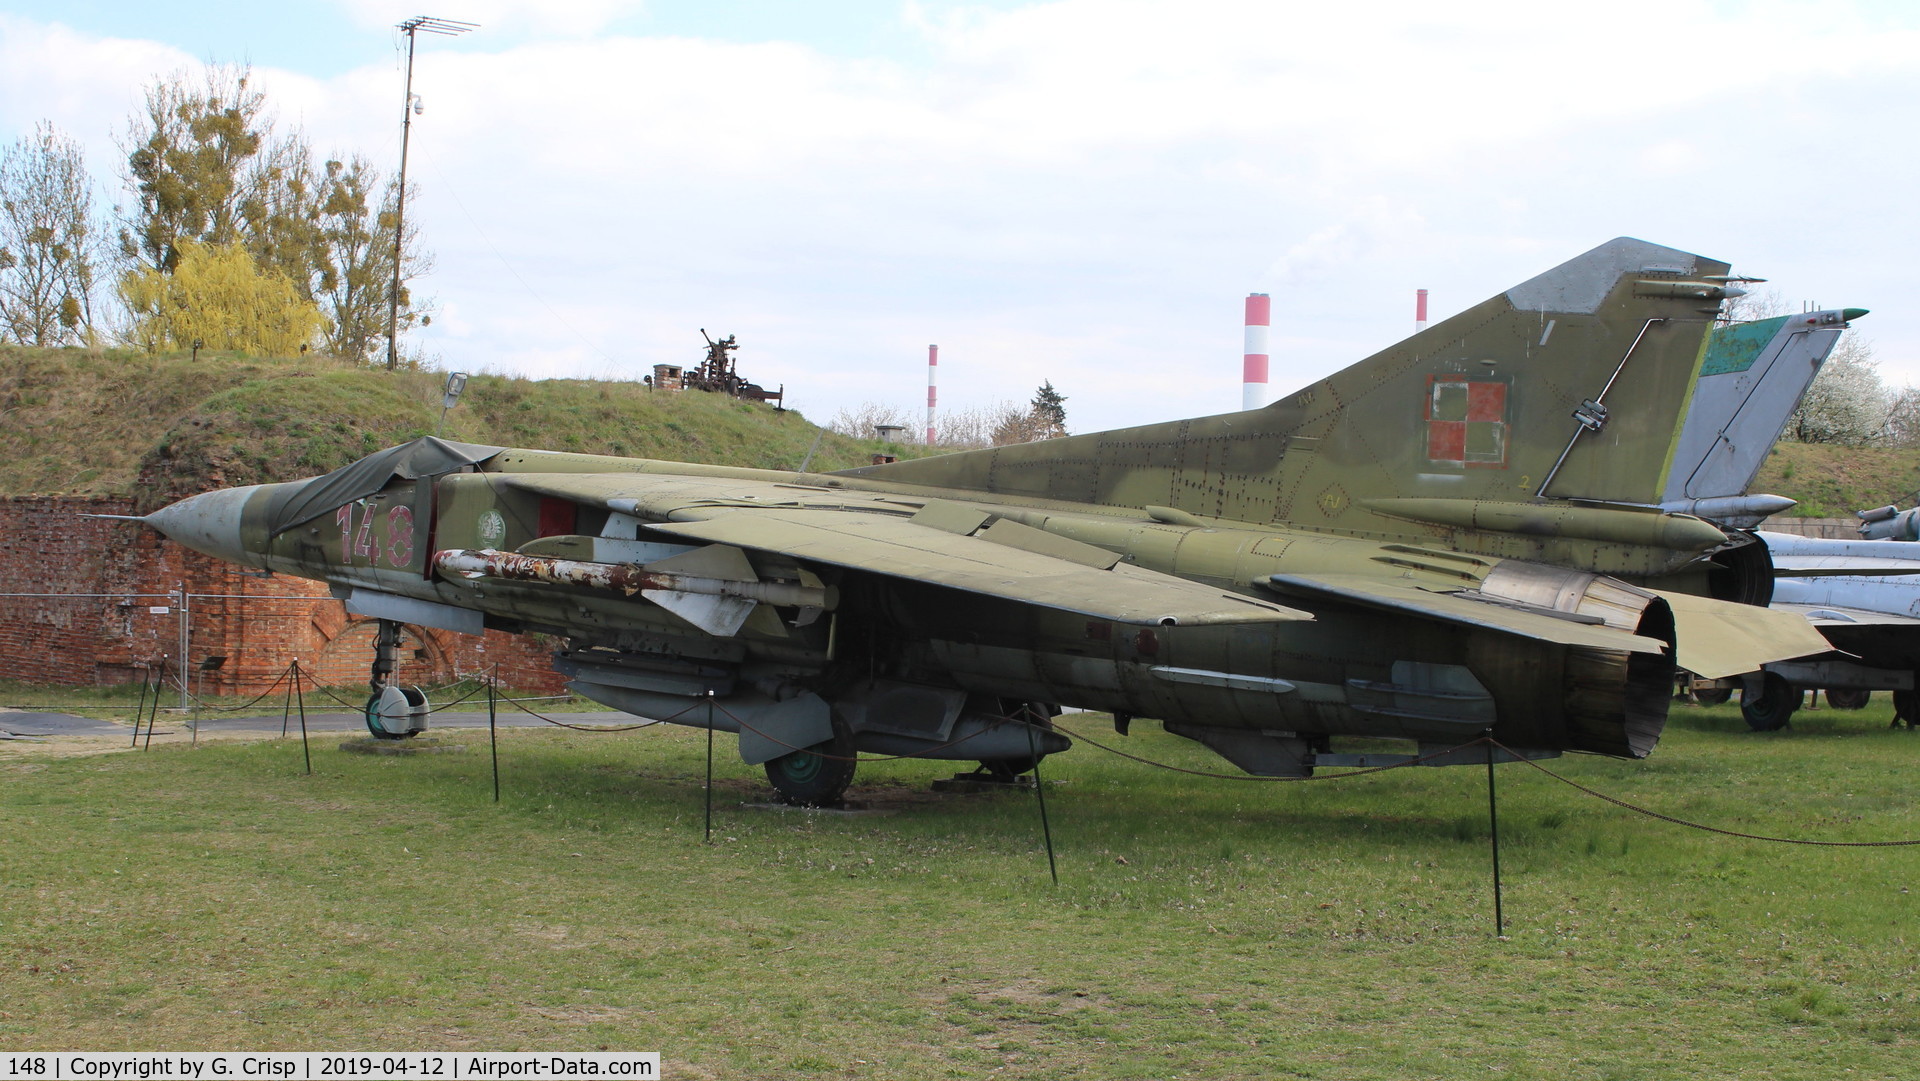 148, Mikoyan-Gurevich MiG-23MF C/N 0390217148/12307, Museum of Military Technology
Fort Sadyba, Warsaw, Poland